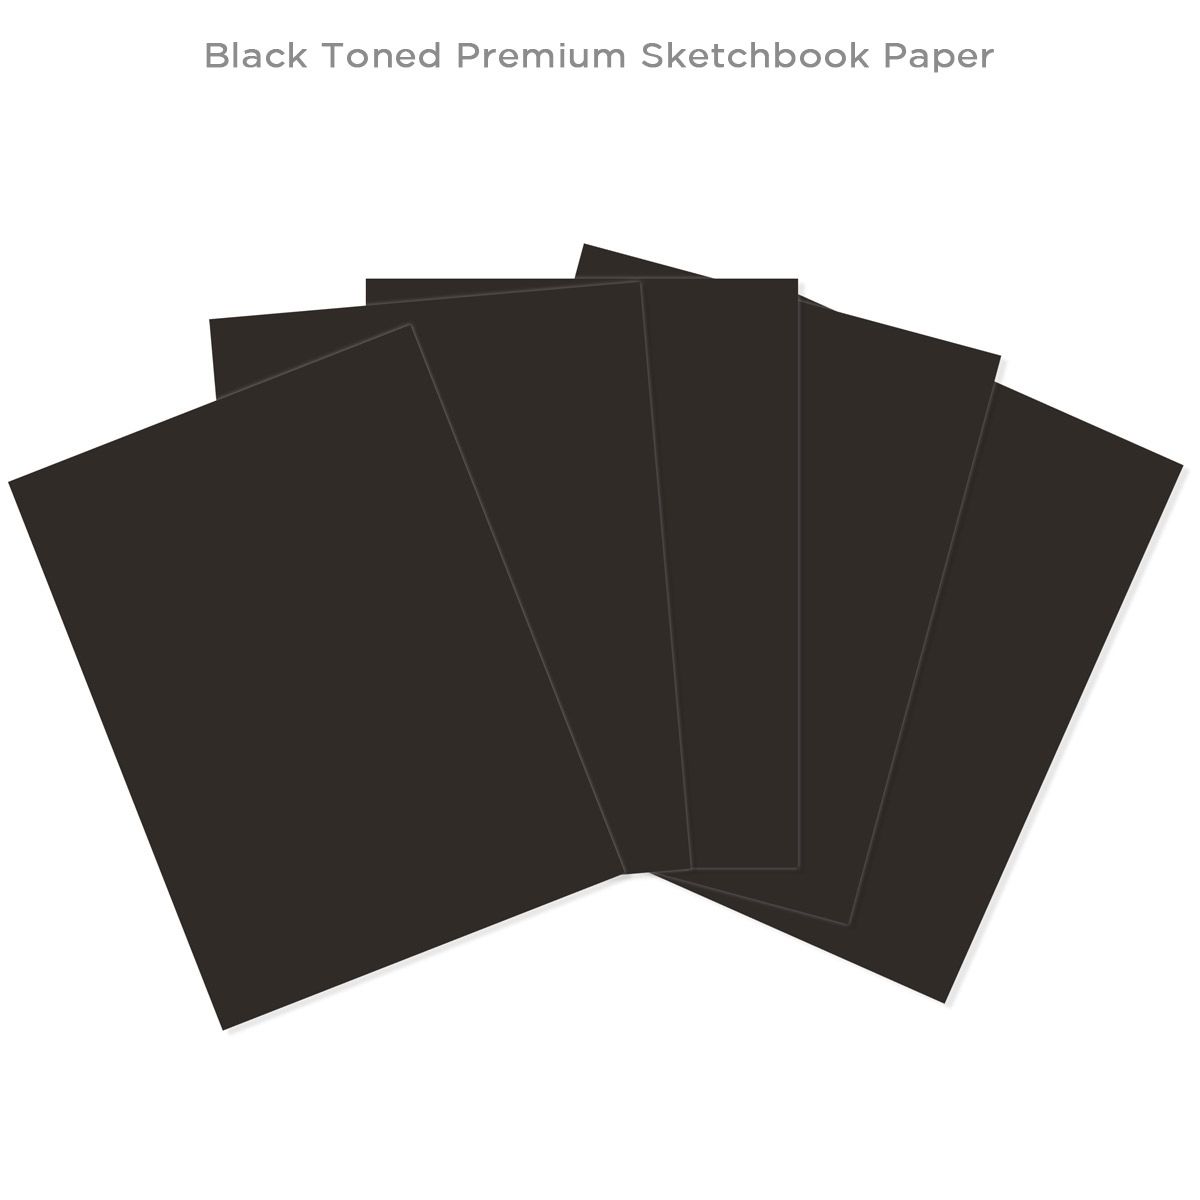 Black Toned Premium Sketchbook Paper